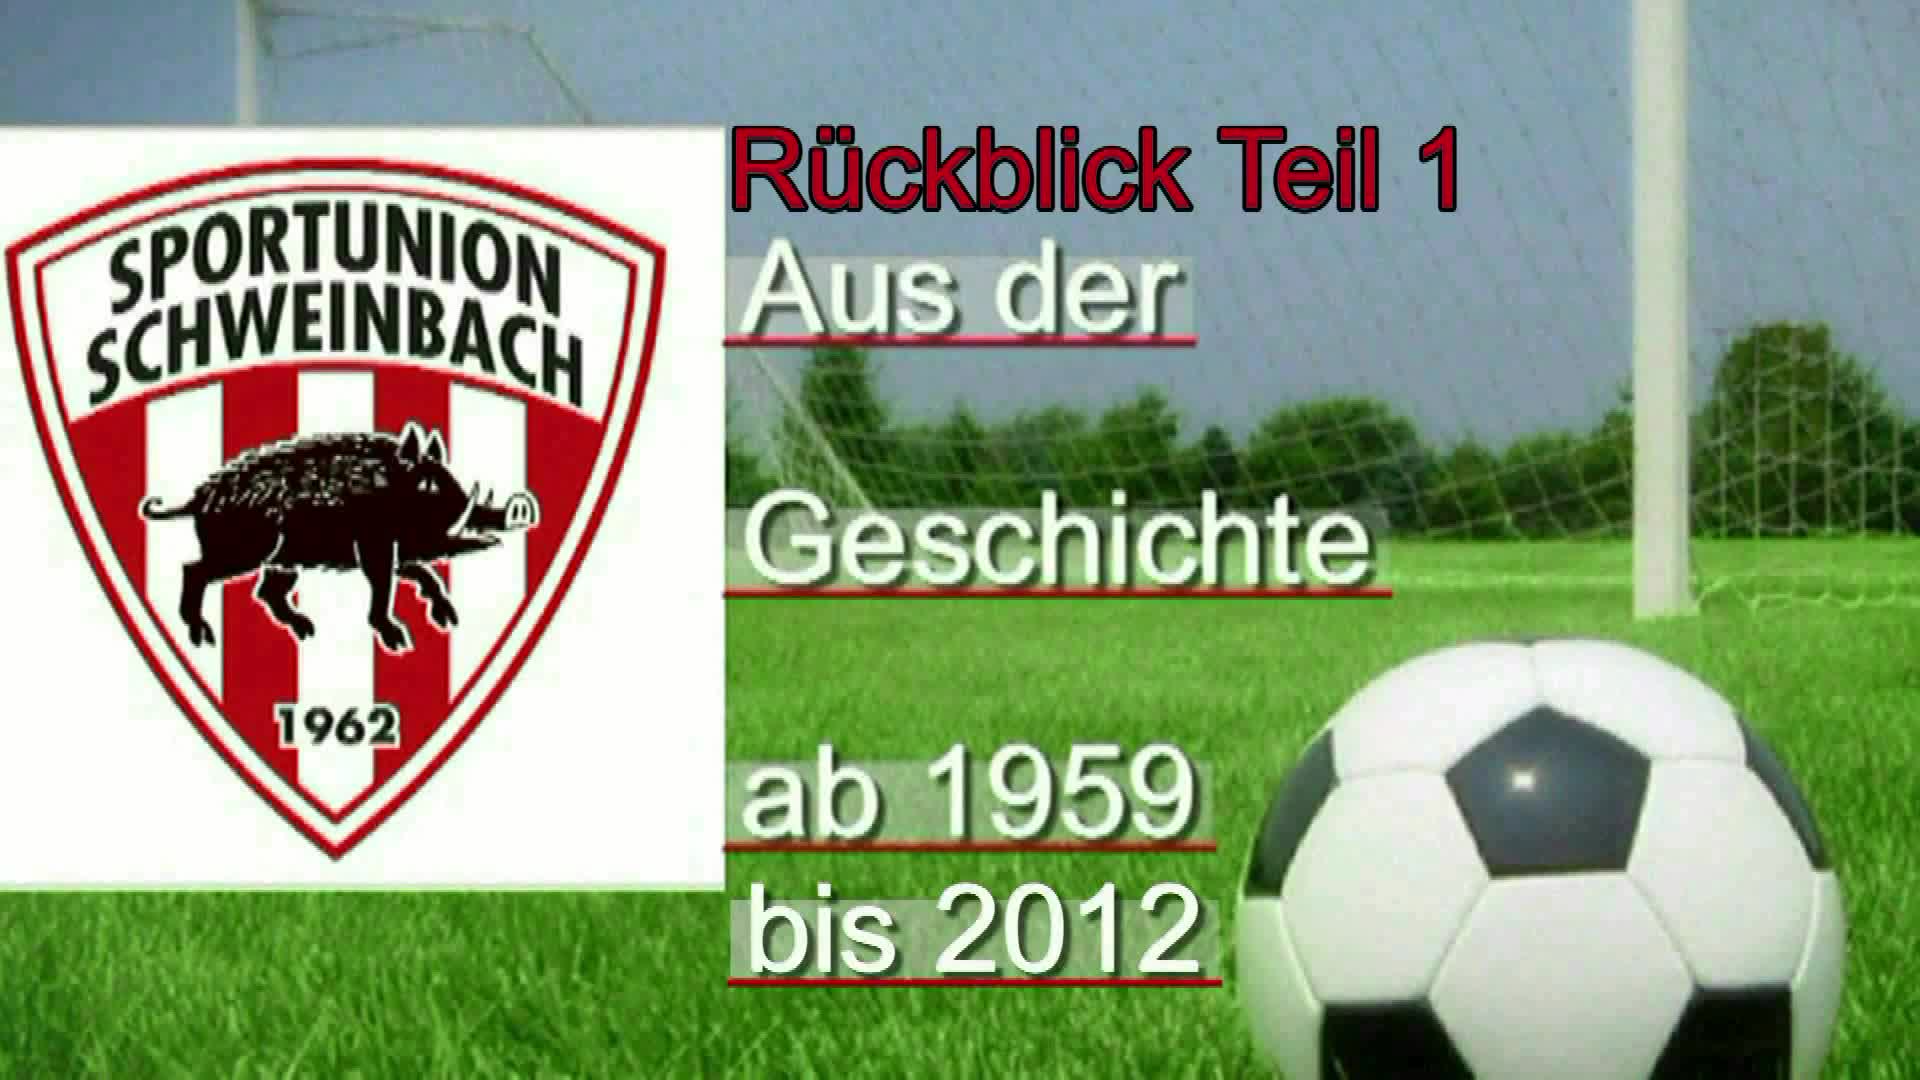 Rückblick-Sportunion Schweinbach, Teil 1